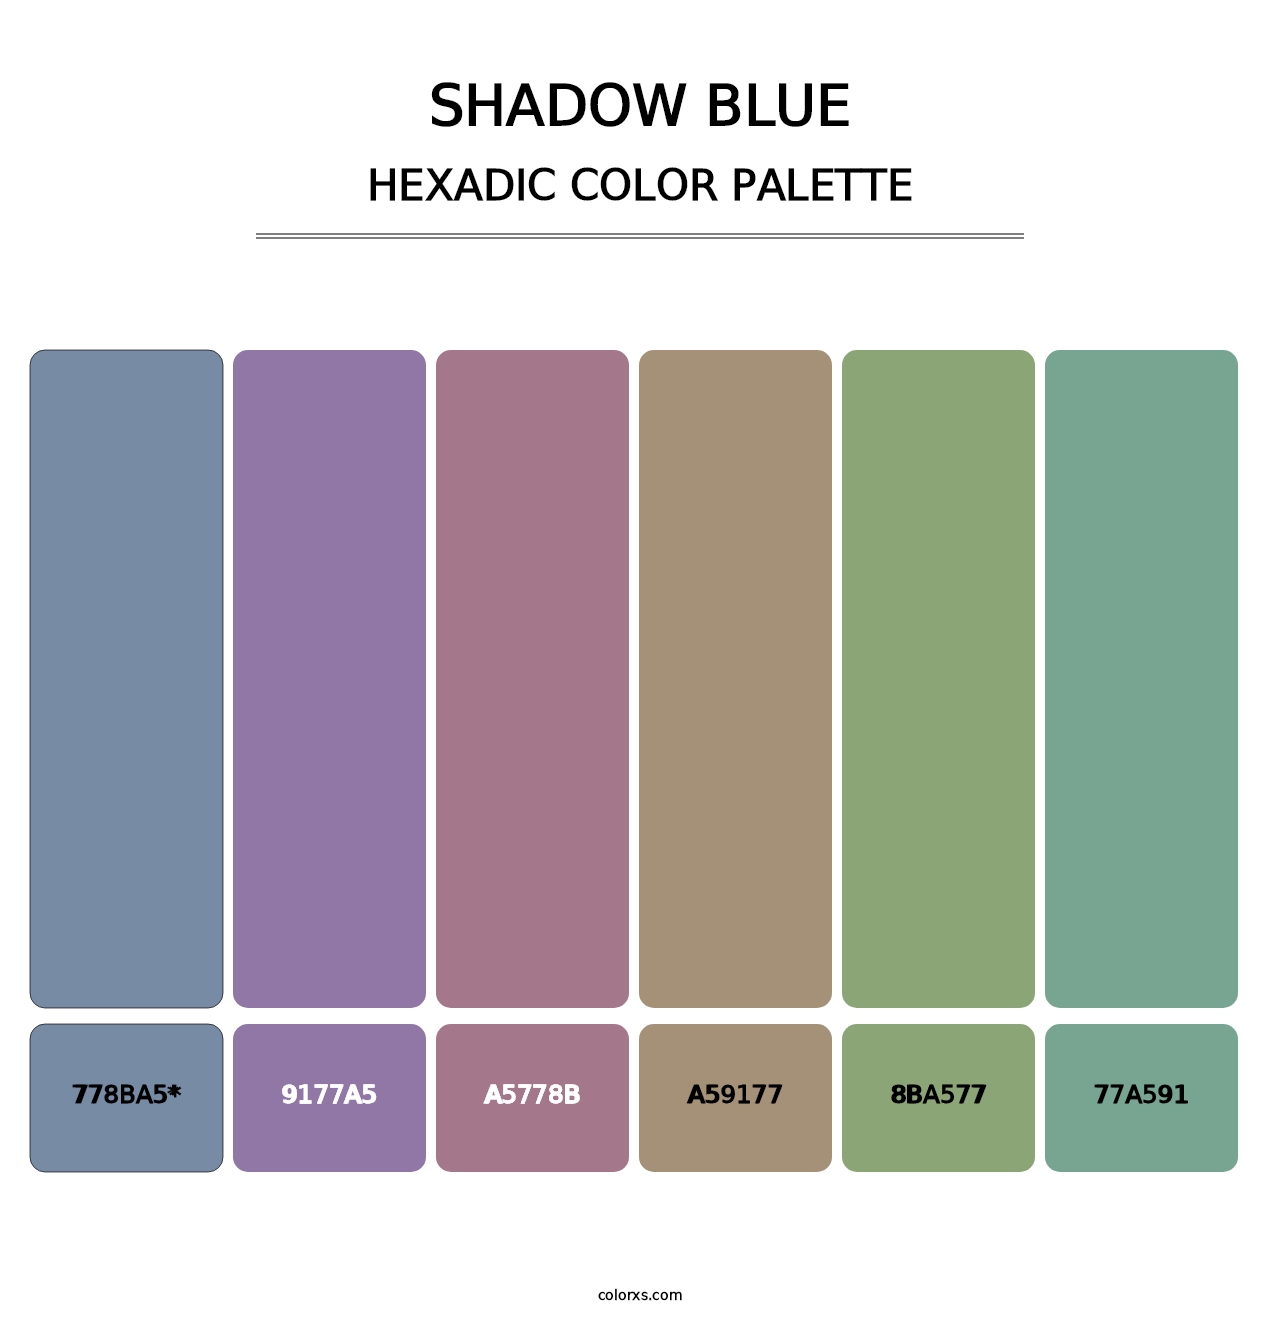 Shadow Blue - Hexadic Color Palette